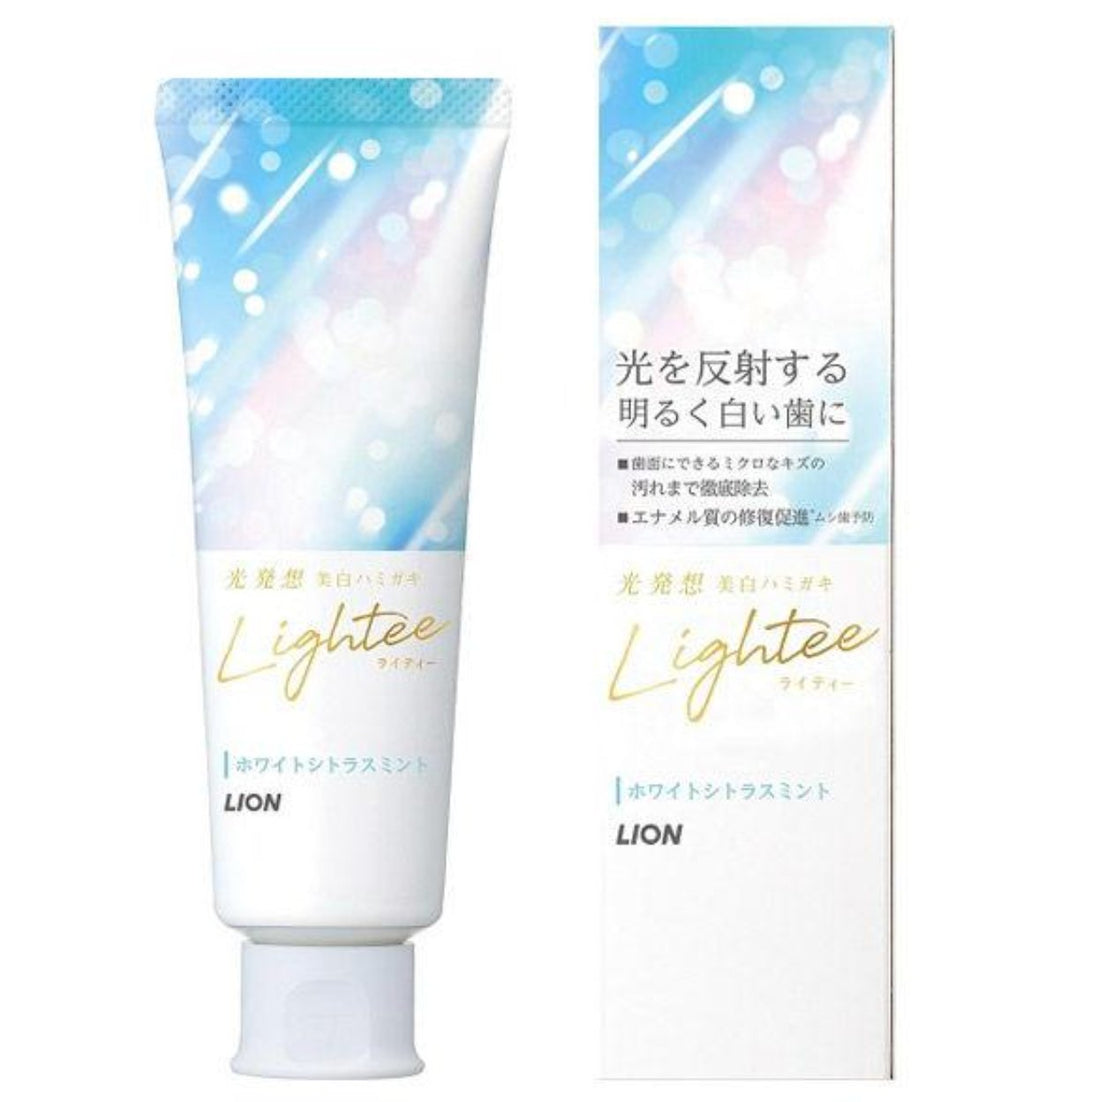 Lightee [Quasi-drug] Whitening Toothpaste White Citrus Mint Toothpaste 100g - NihonMura